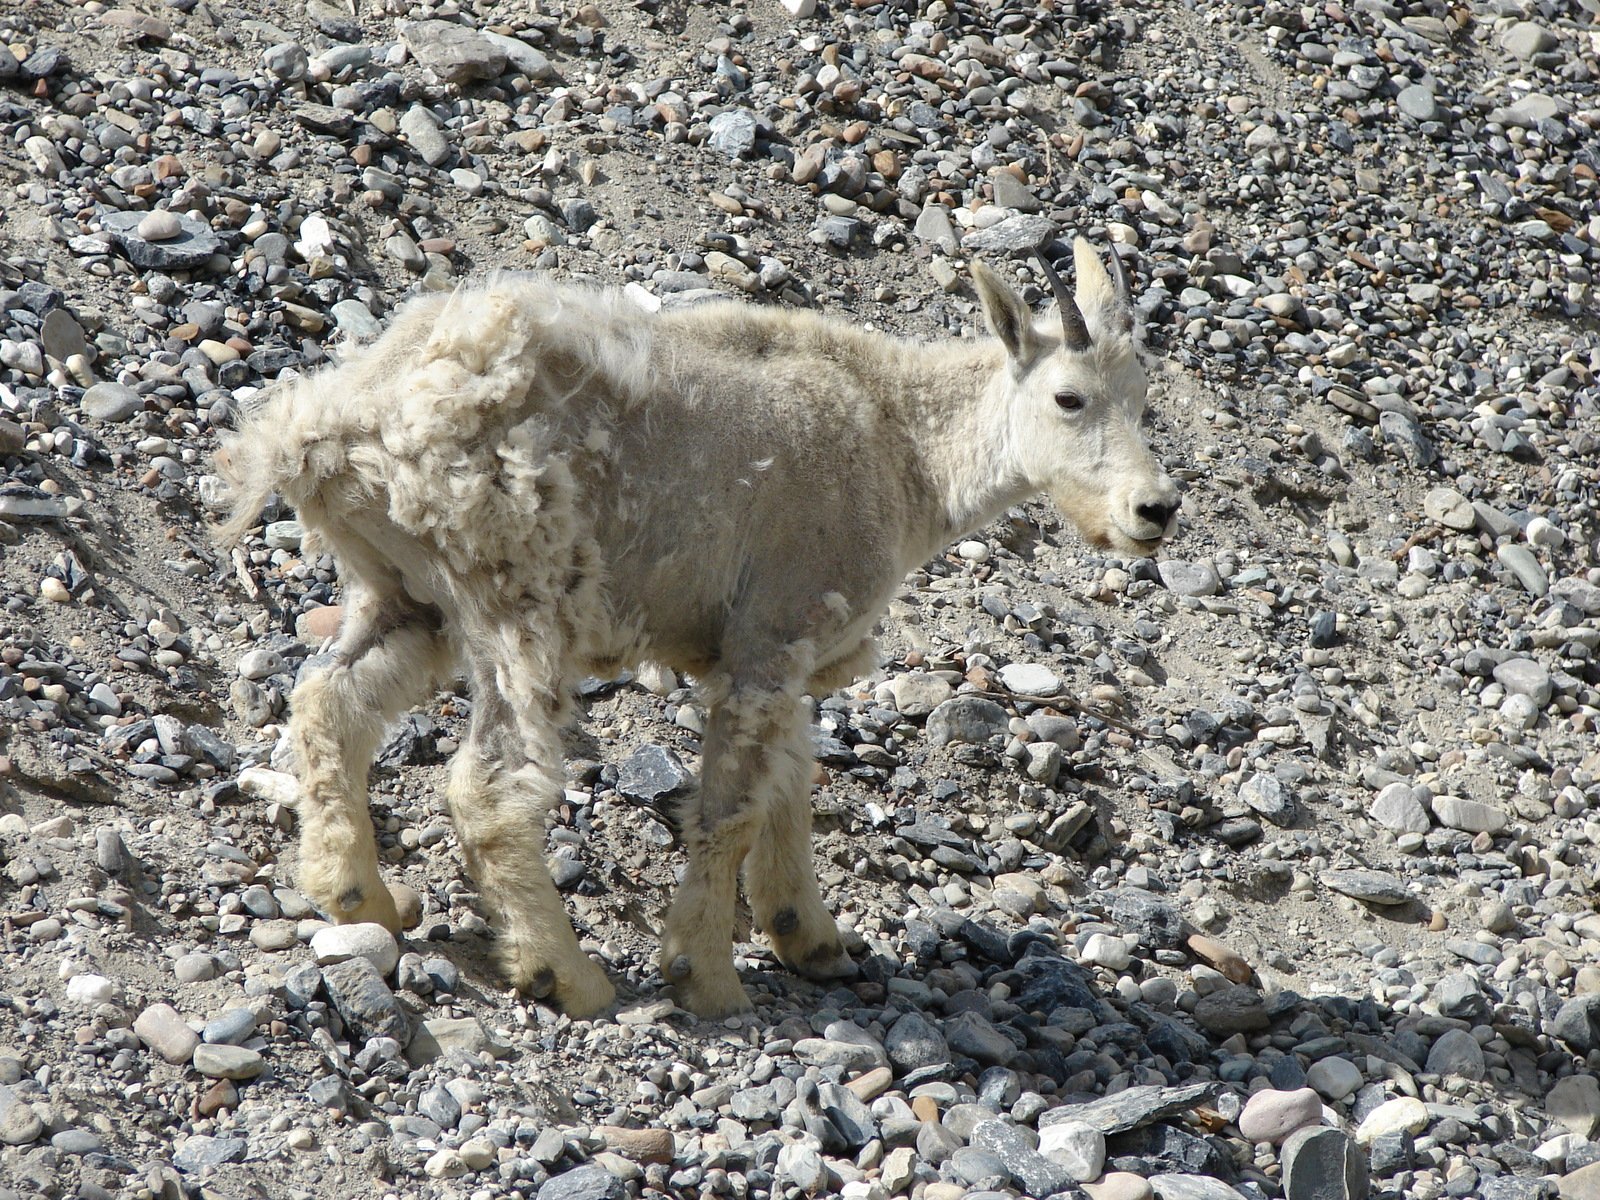 the baby goat is walking along among rocks